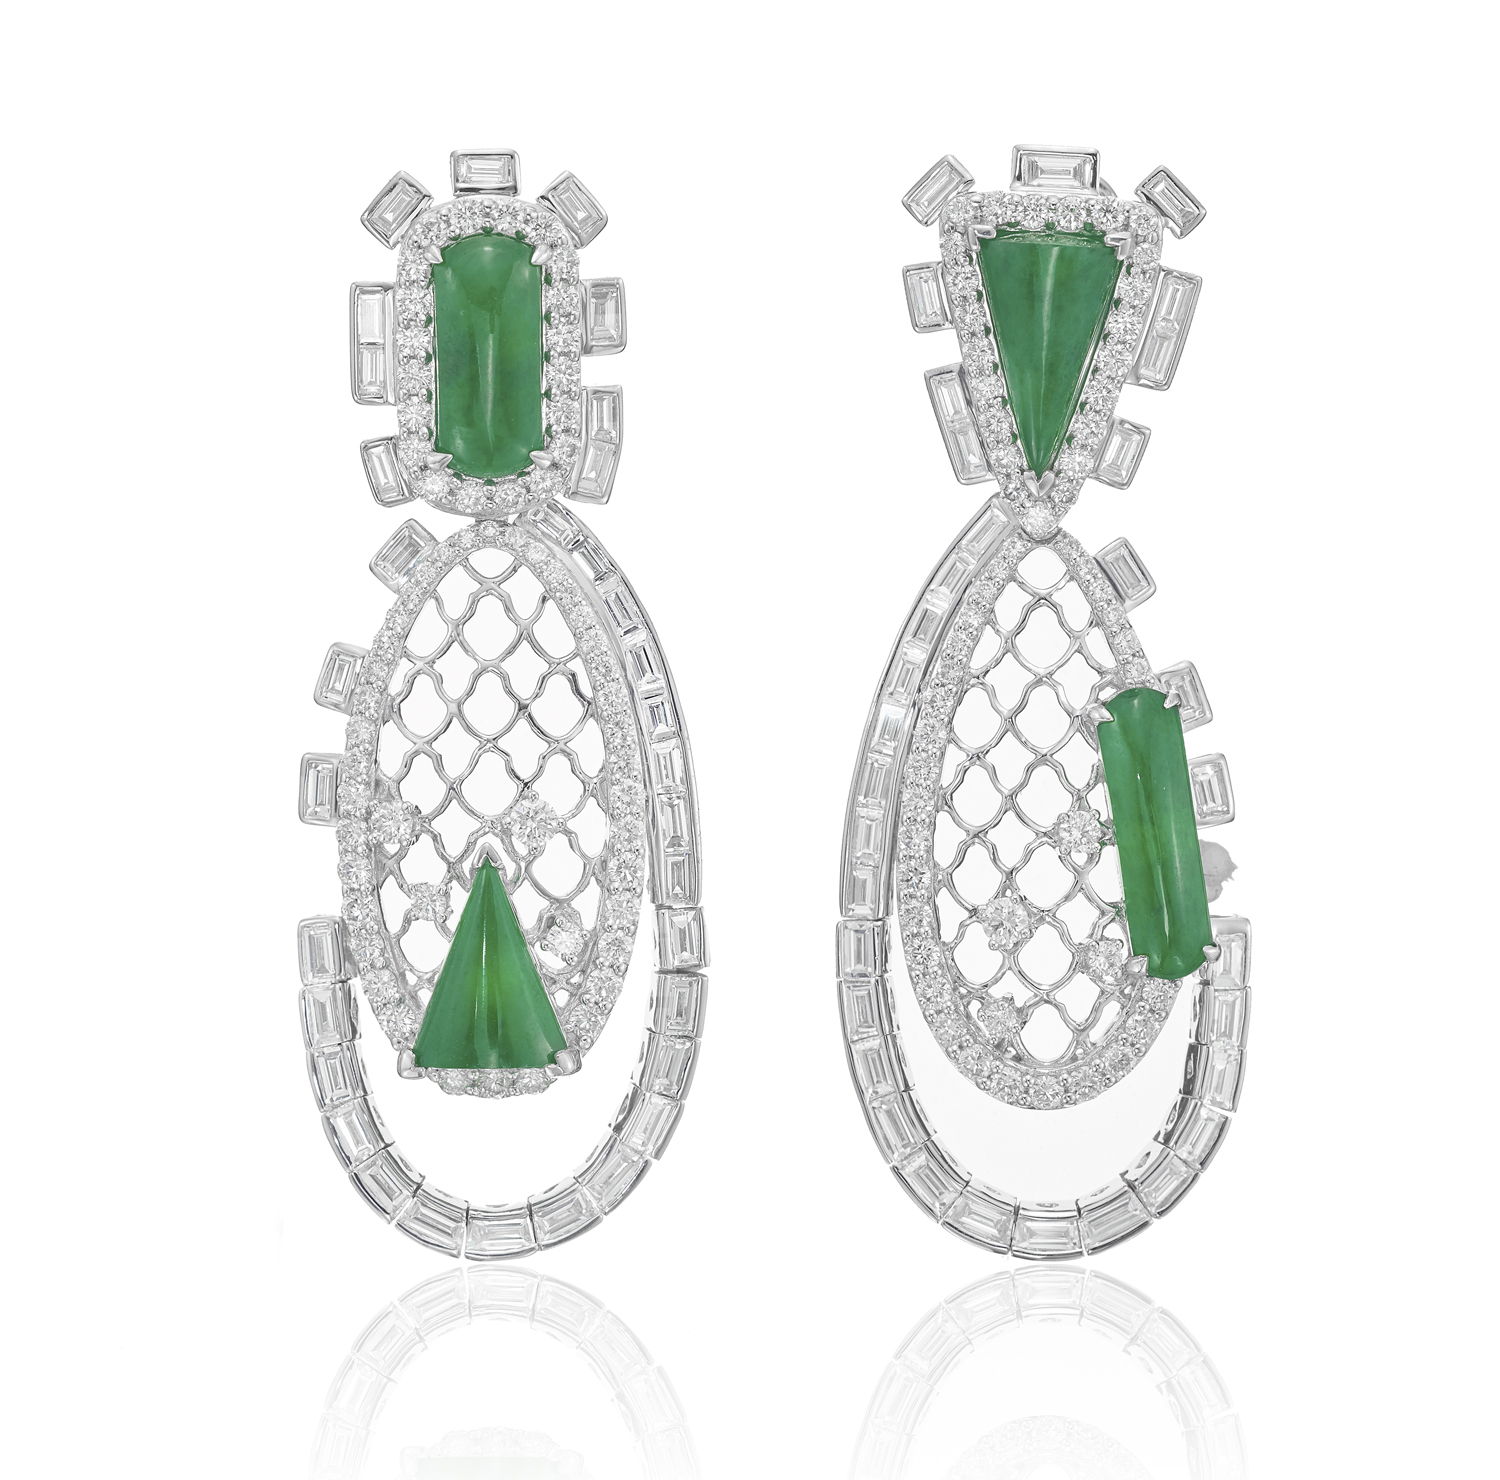 Jade diamond earrings by Sarah Ho